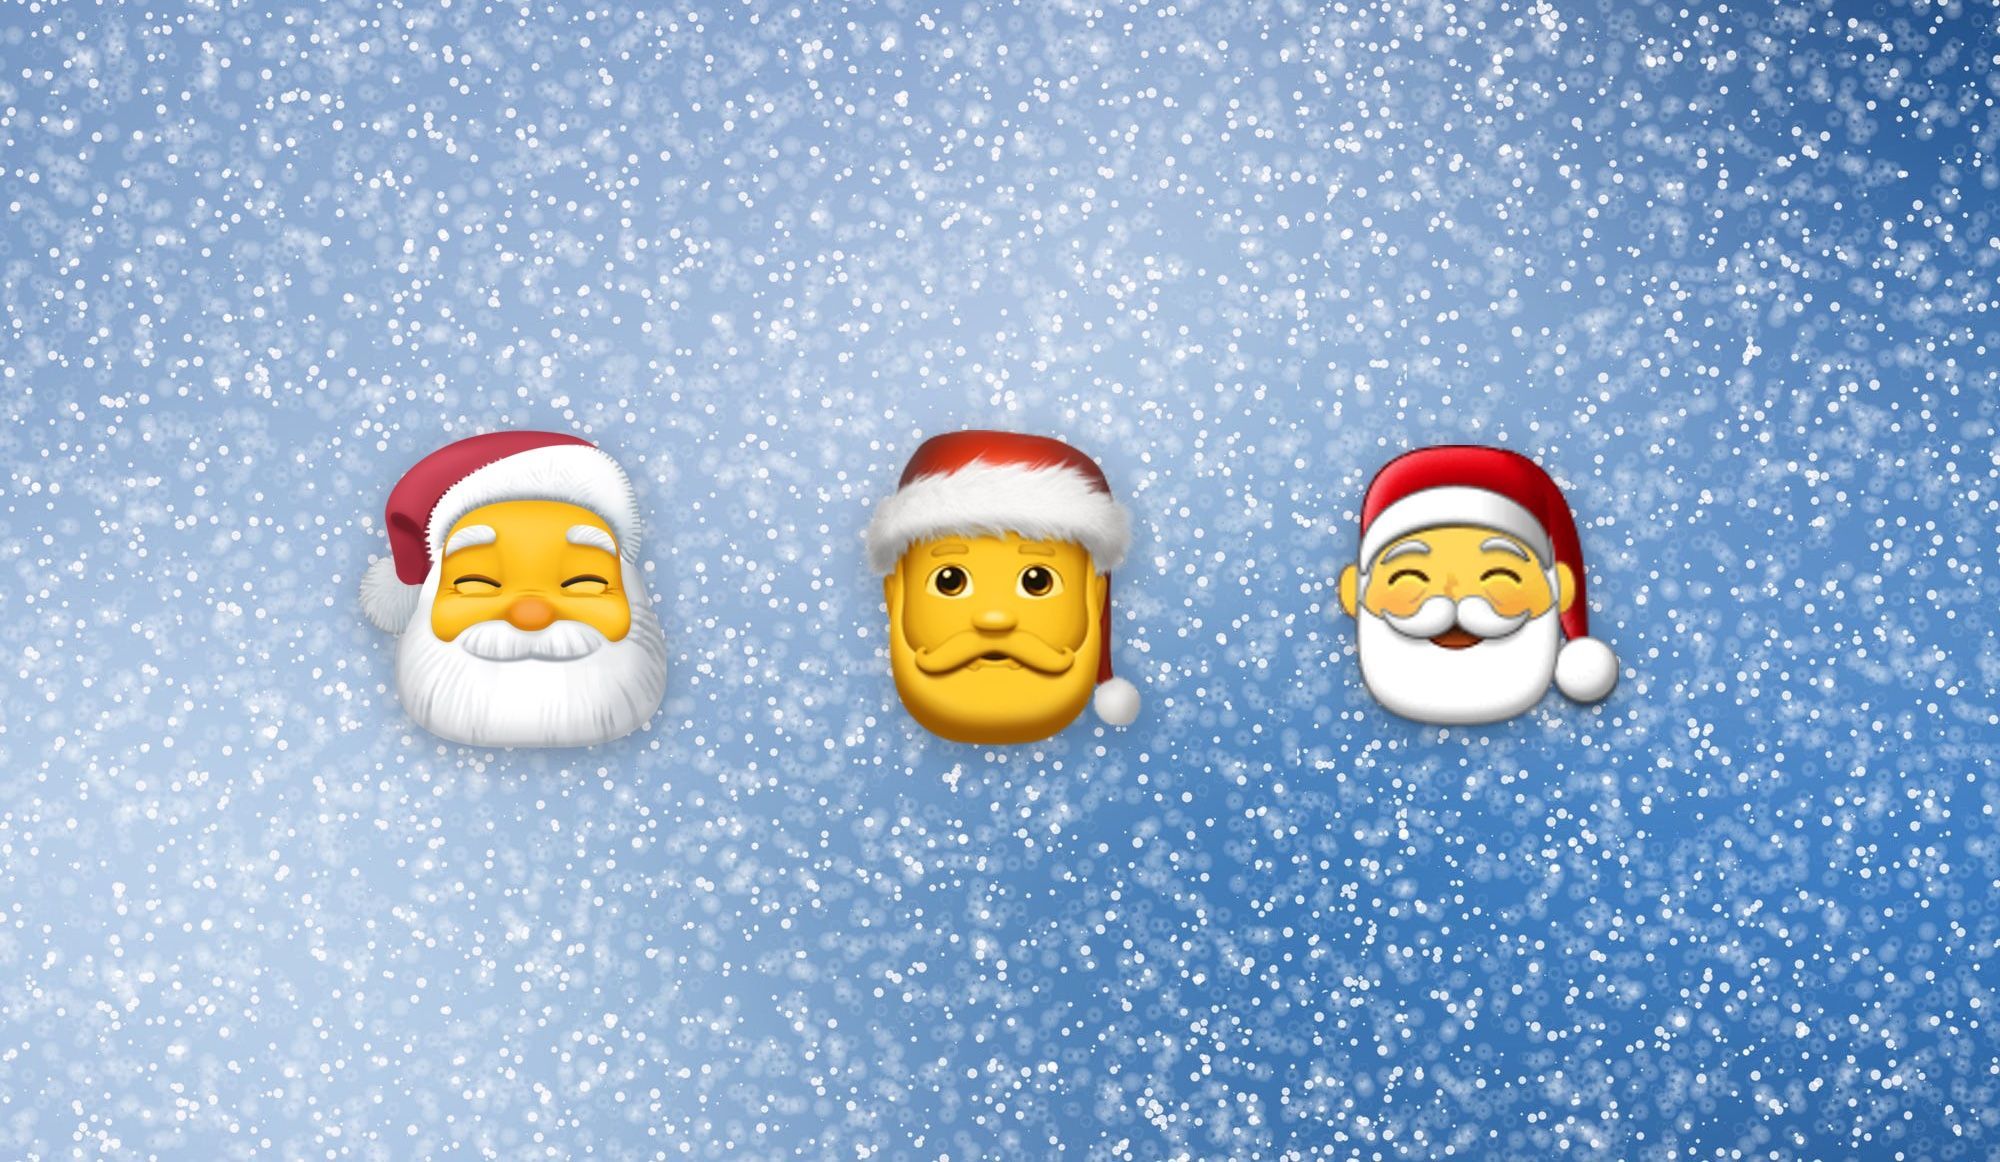 Christmas Emojis: The Comprehensive Guide